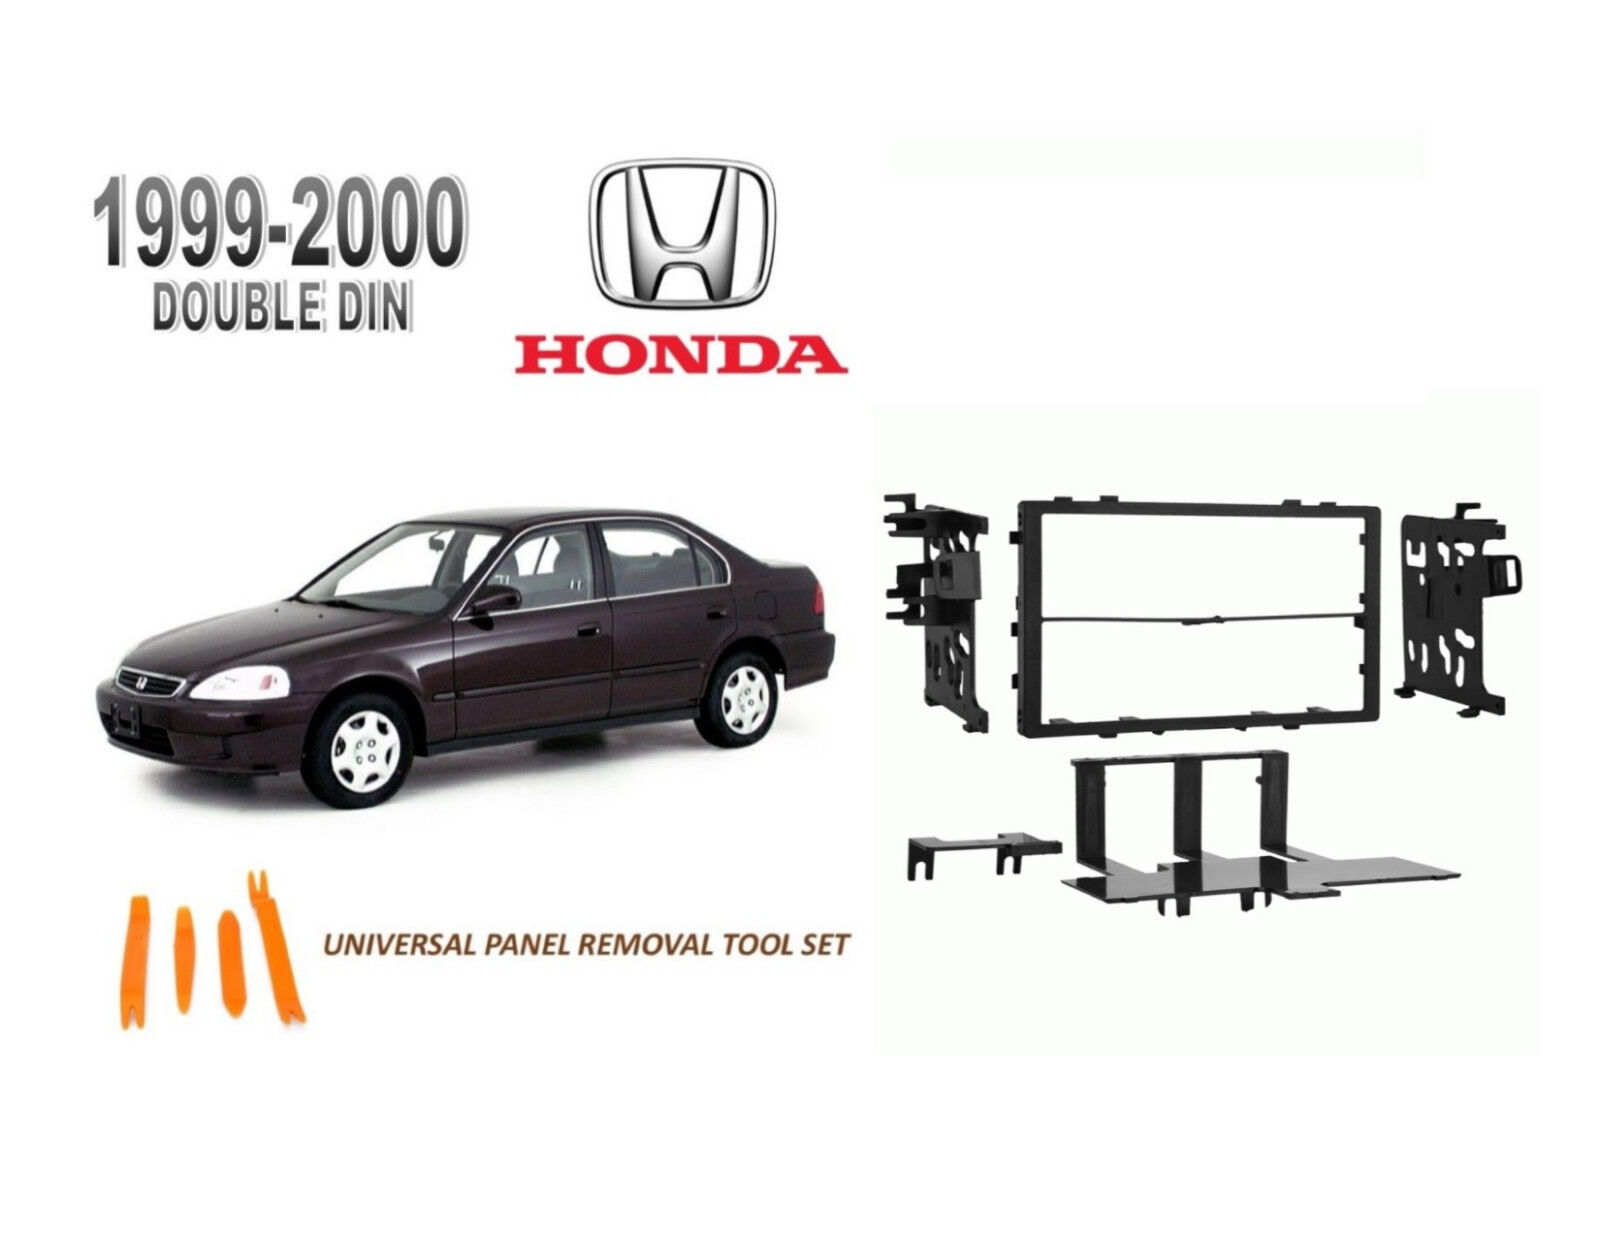 NEW 1999-2000 HONDA CIVIC Car Stereo Double DIN Dash Kit, Tool Set